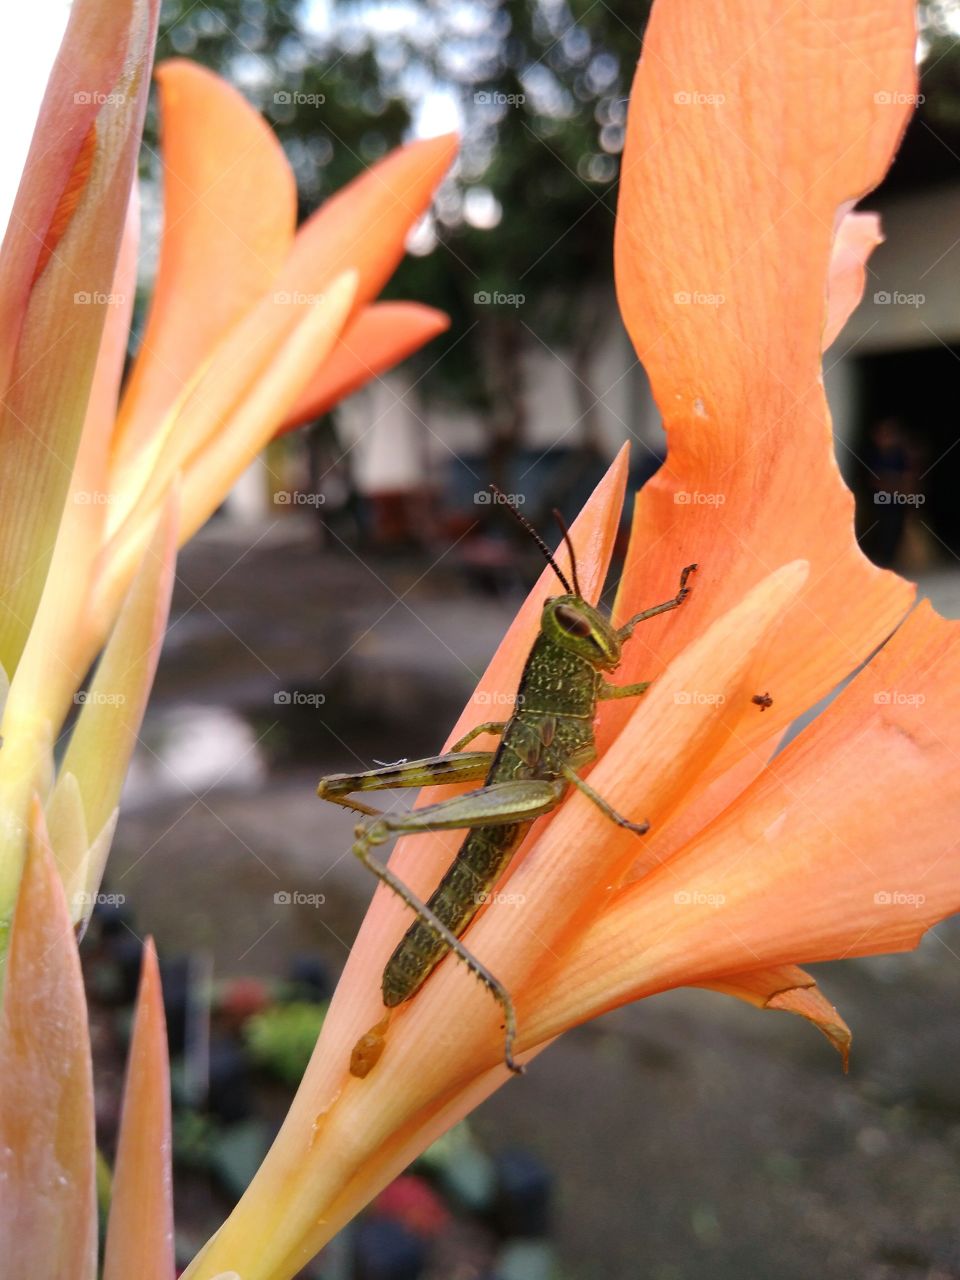 Grasshoppers and orange flowers by Geyol Sisalak